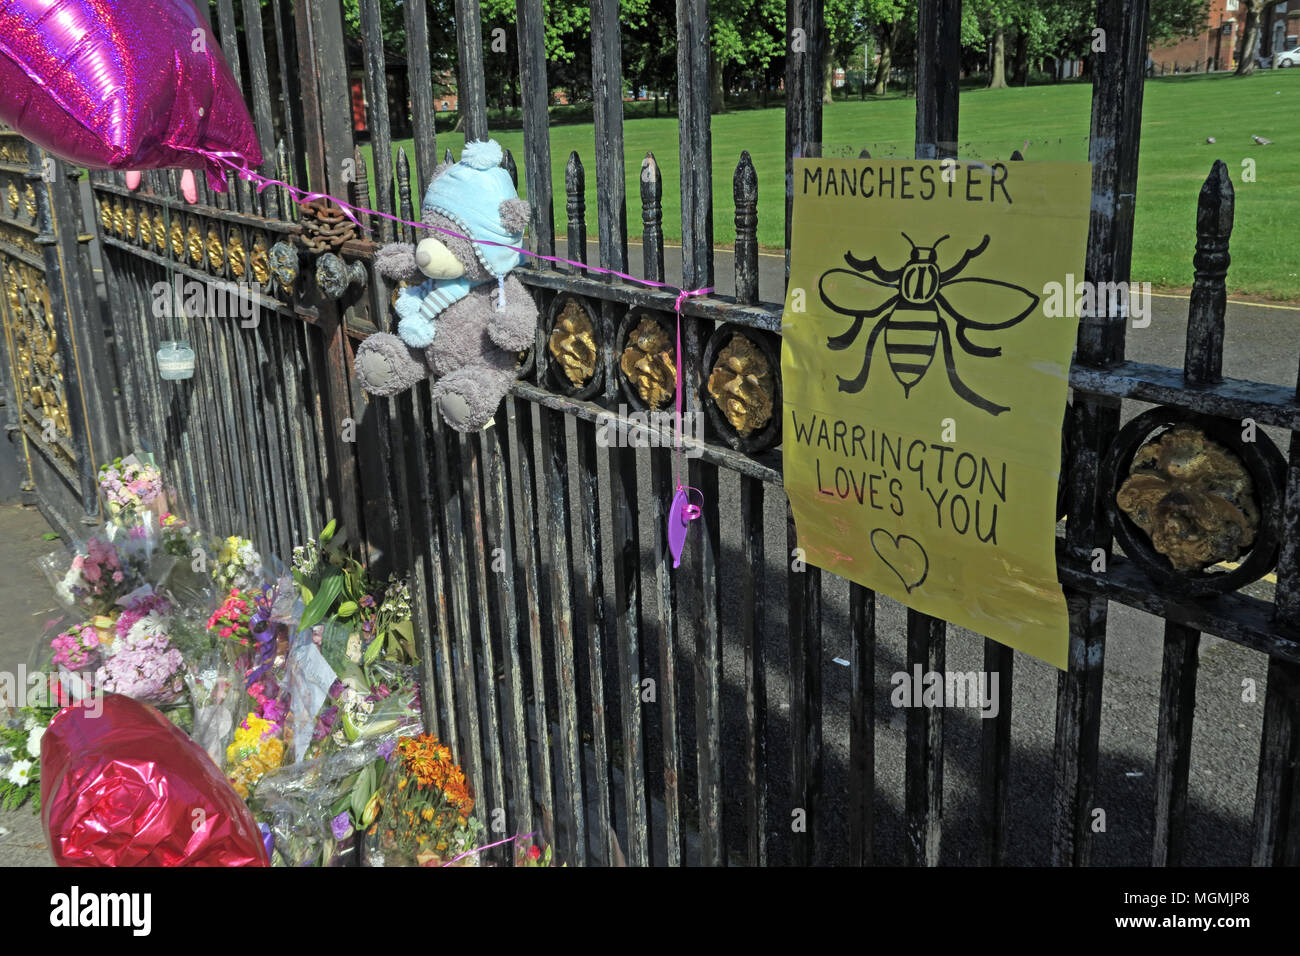 Golden Gates Sankey St Warrington after Manchester Bombing 2017 Stock Photo